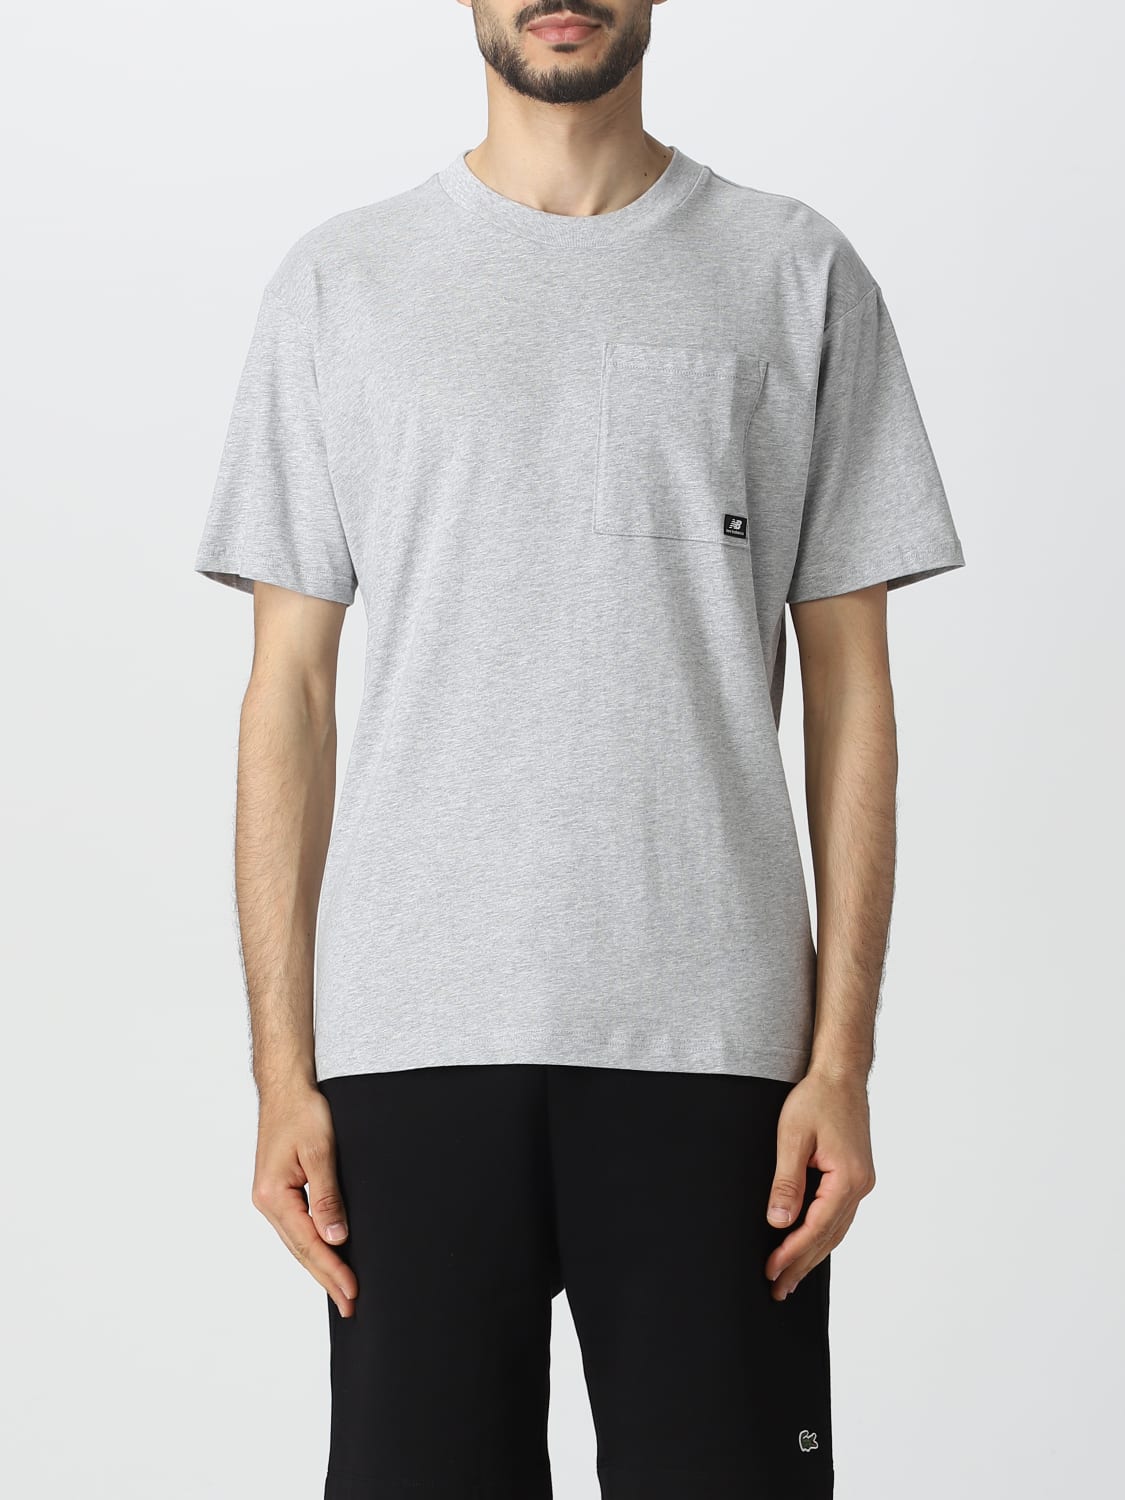 NEW BALANCE: t-shirt for man - Grey | New Balance t-shirt MT31542AG ...